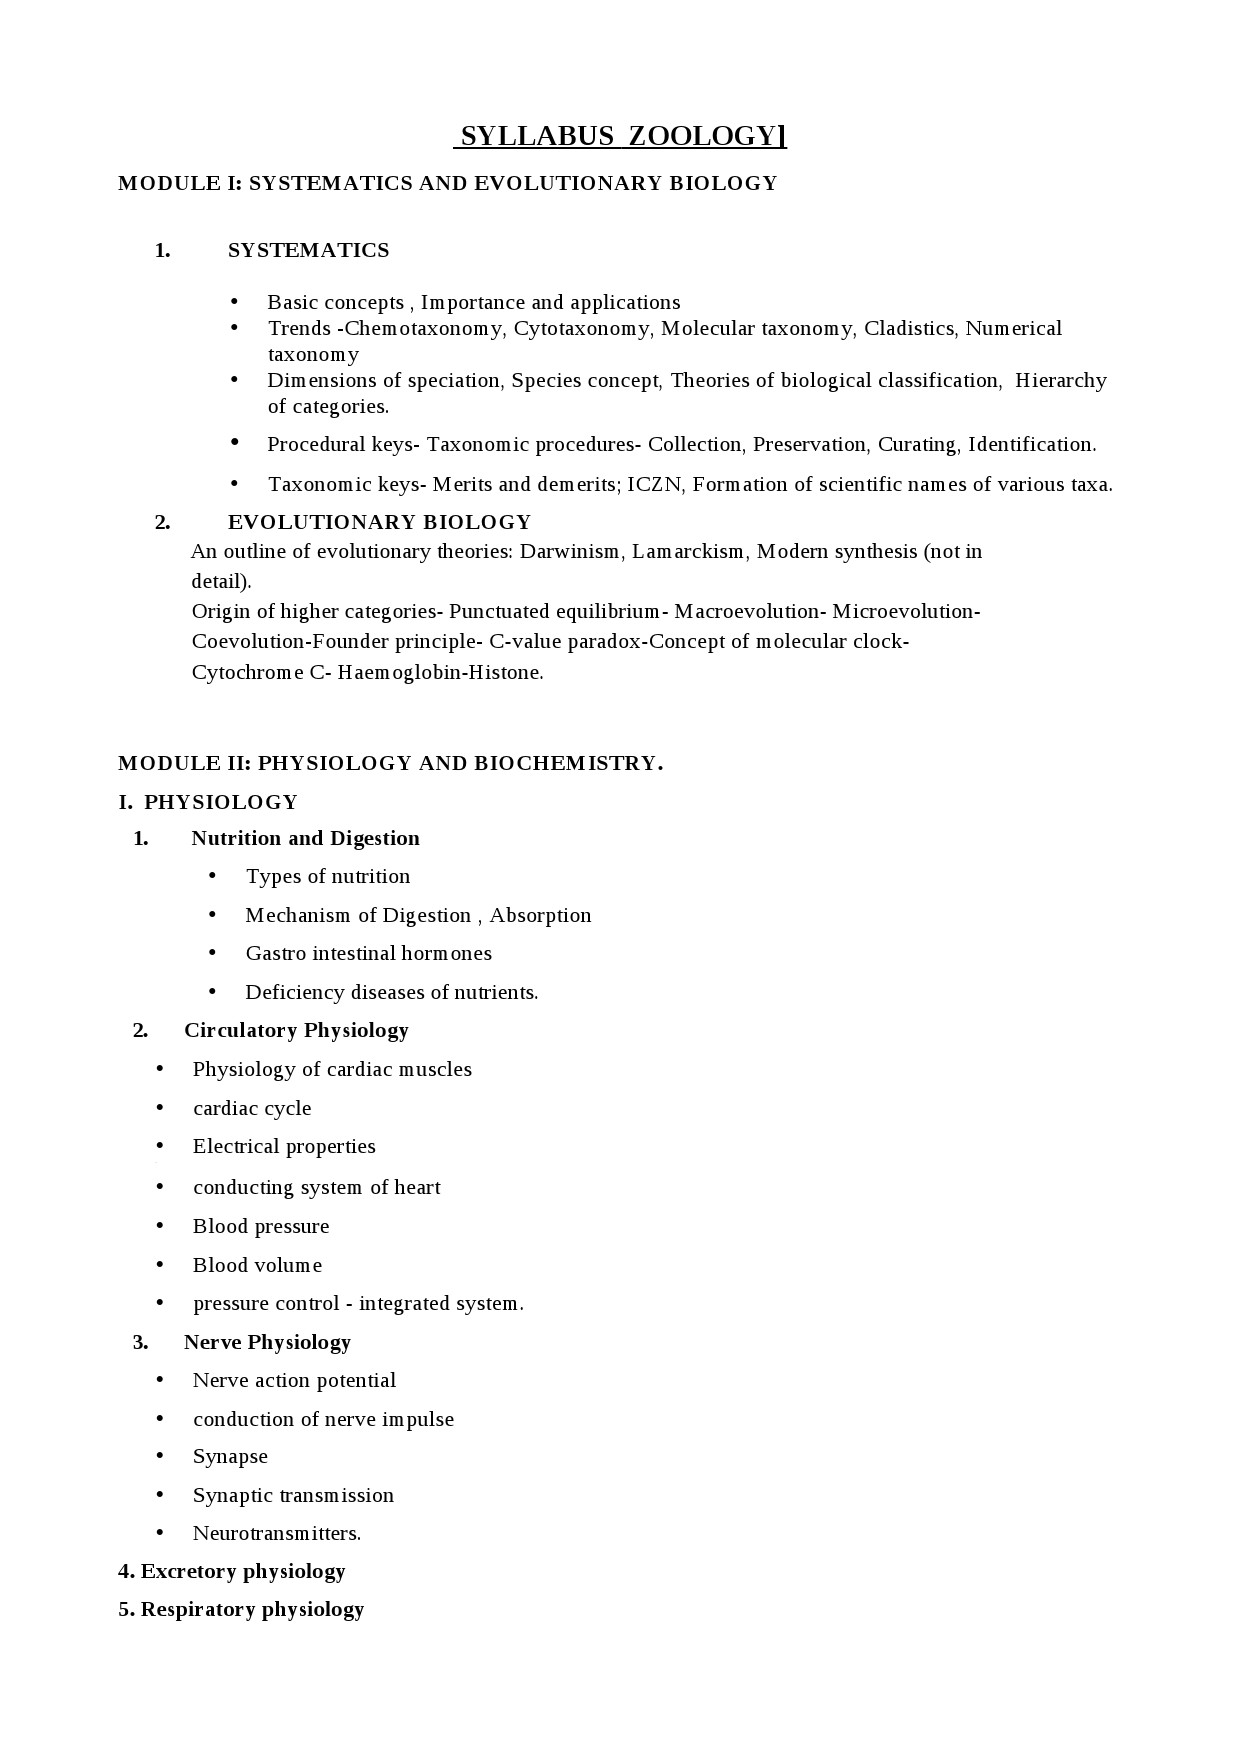 Science Syllabus for Kerala PSC 2021 Exam - Notification Image 40